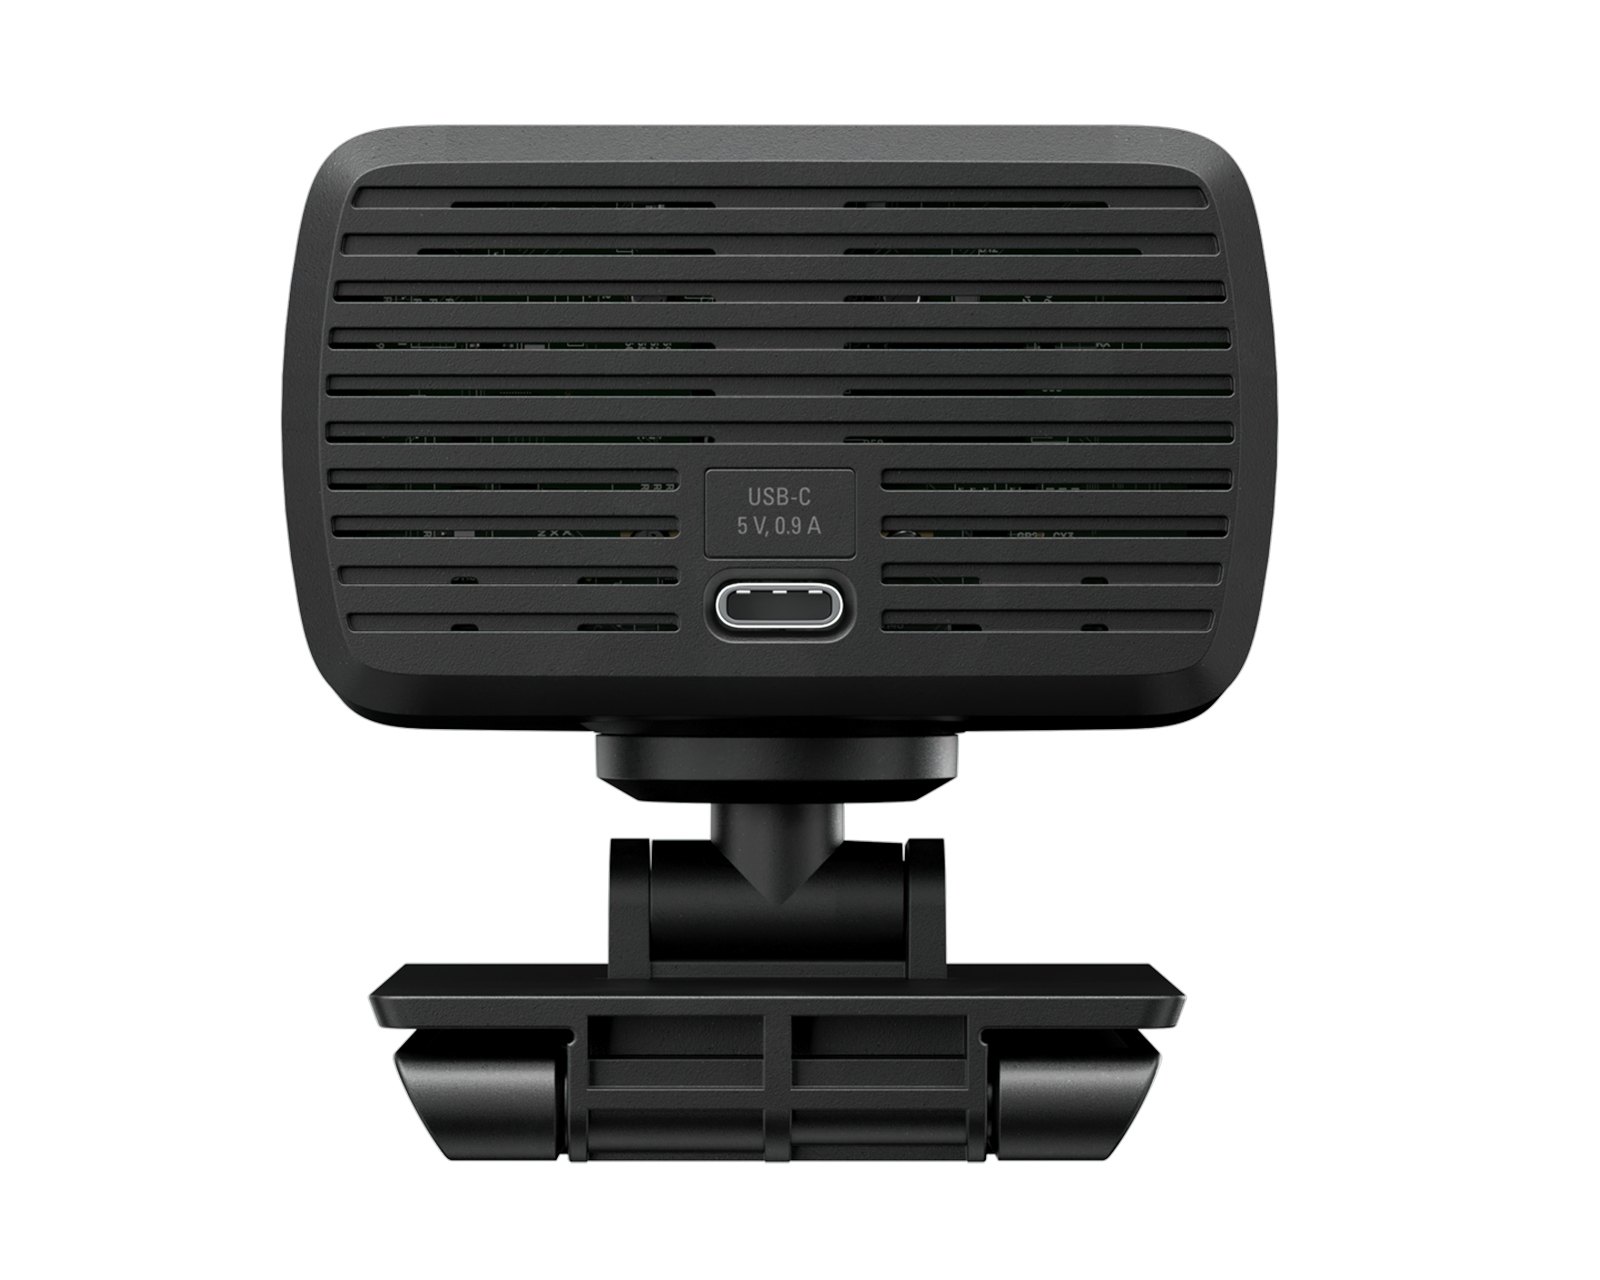  Elgato Facecam Pro, True 4K60 Ultra HD Webcam for